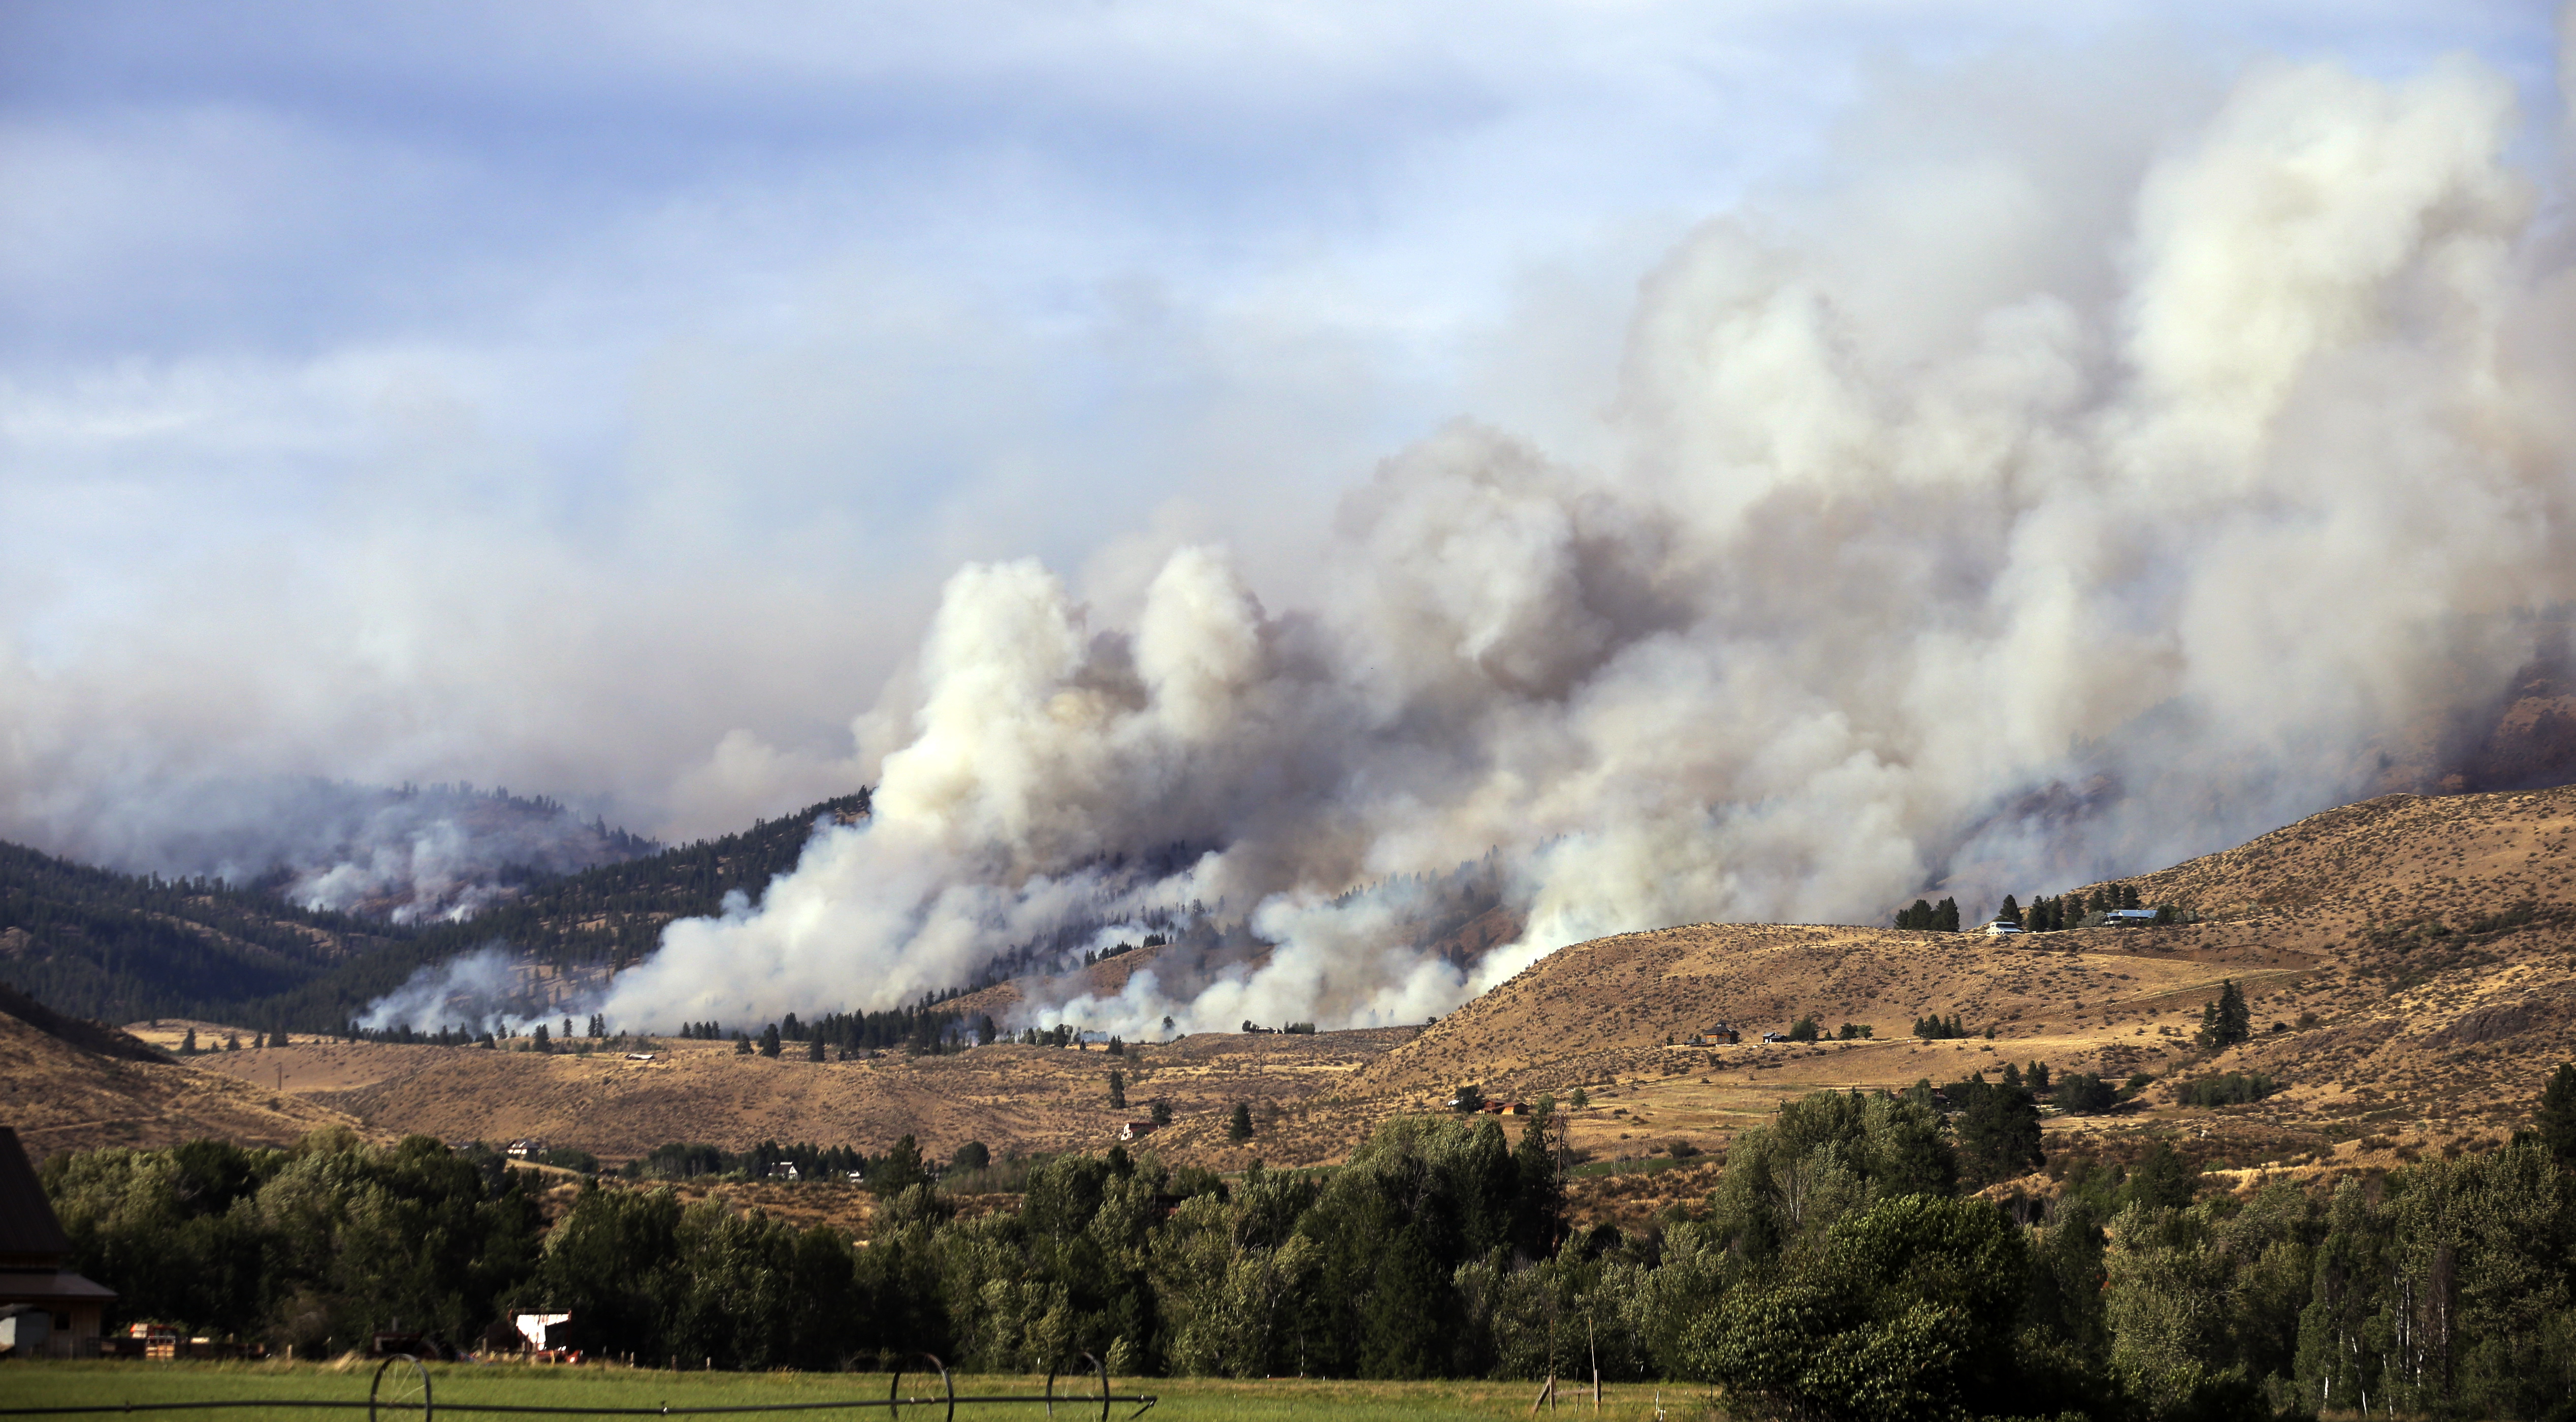 Better Weather May Help Firefighters Fight Massive Washington Blaze